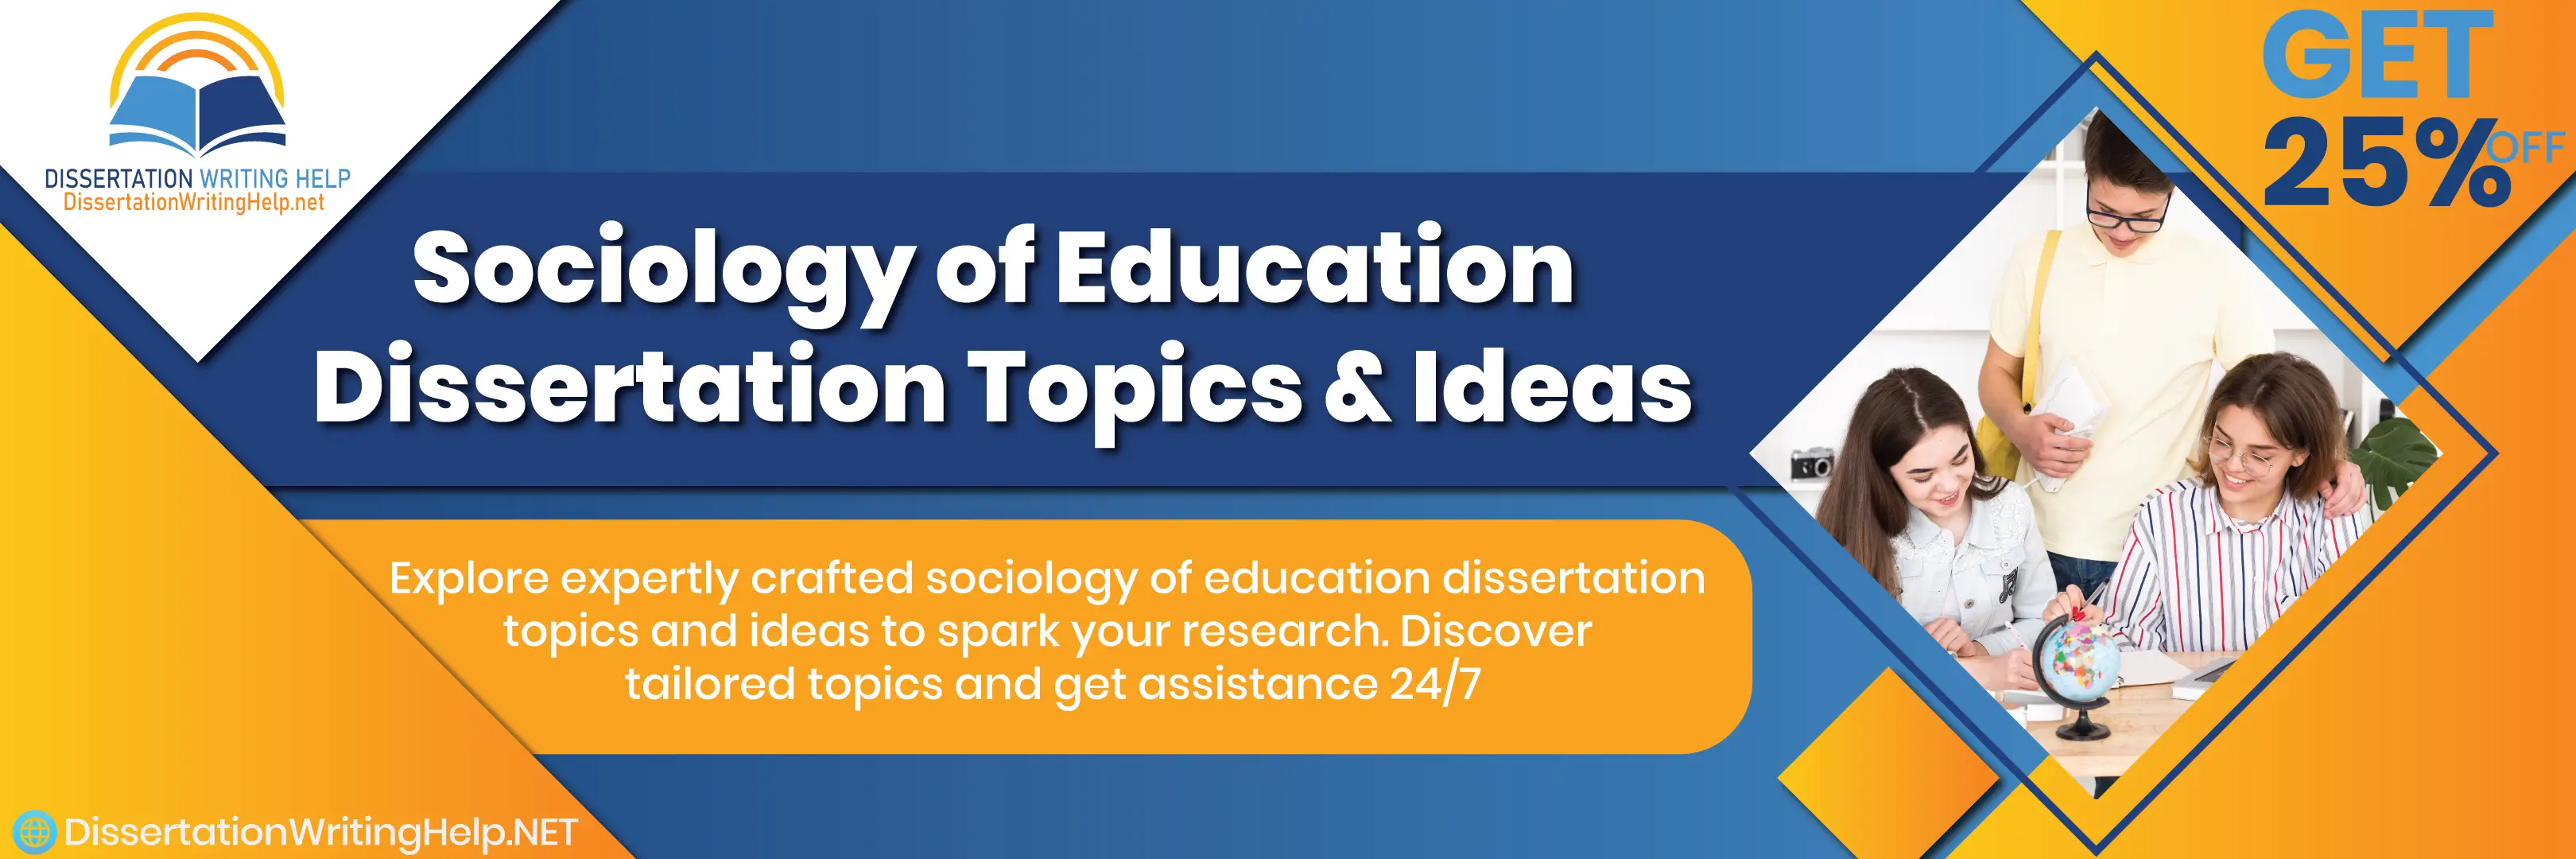 Sociology-of-Education-Dissertation-Topics-Ideas